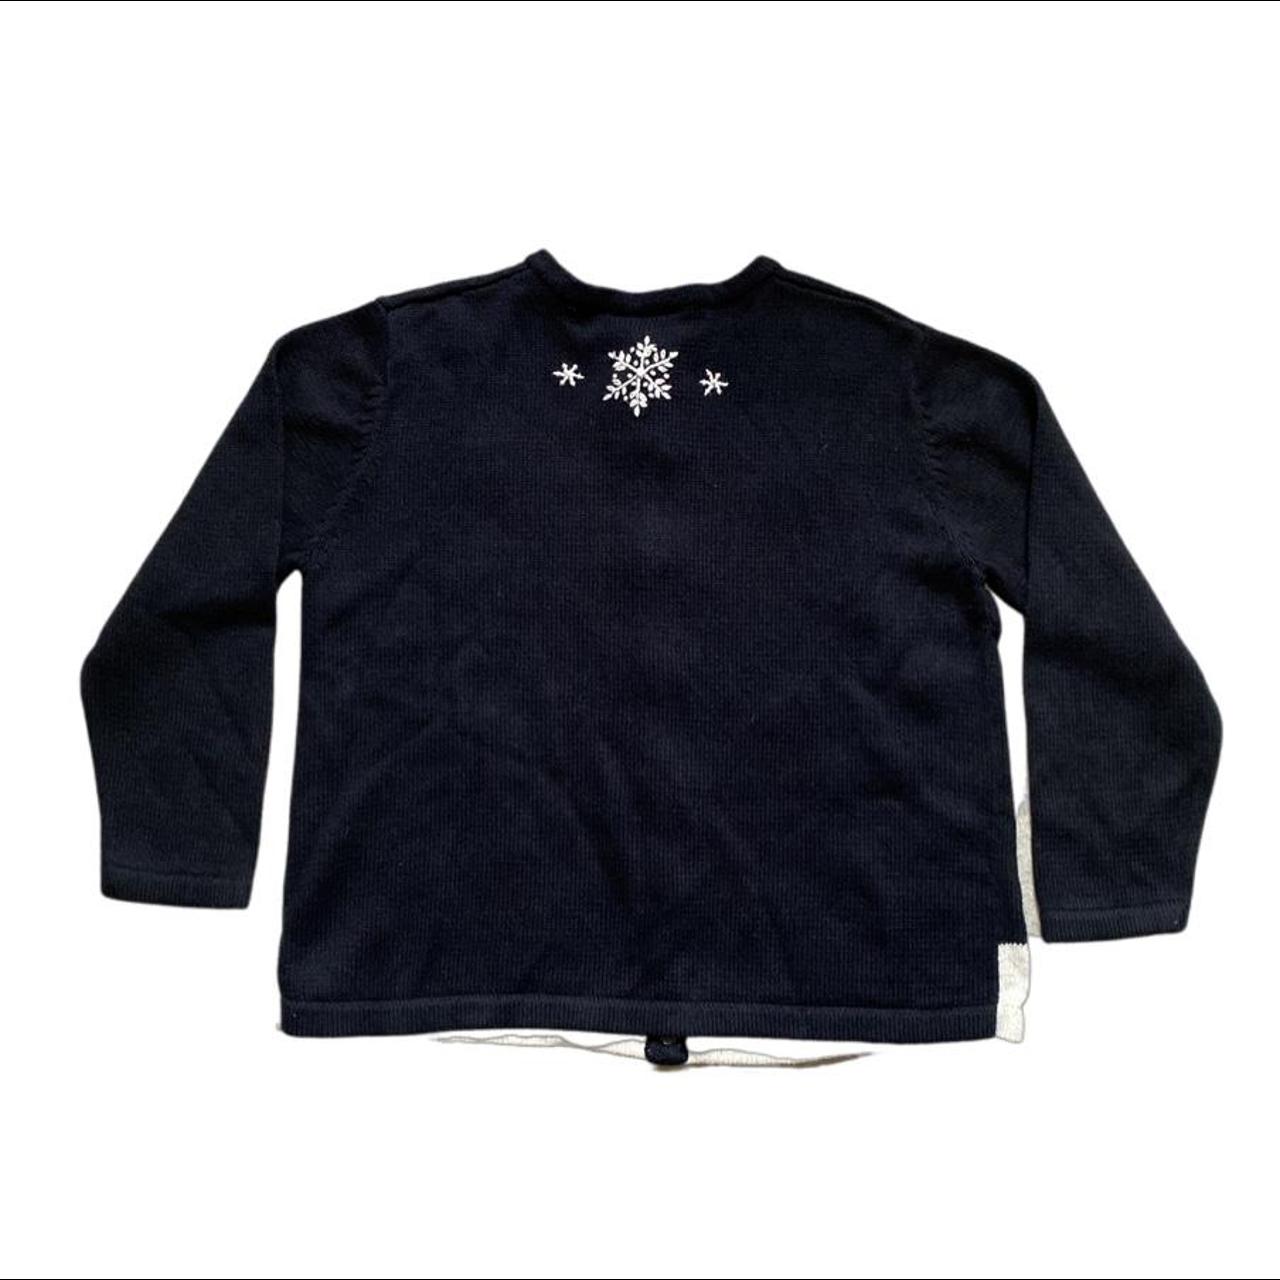 Product Image 3 - NWT Kmart Christmas sweater cardigan